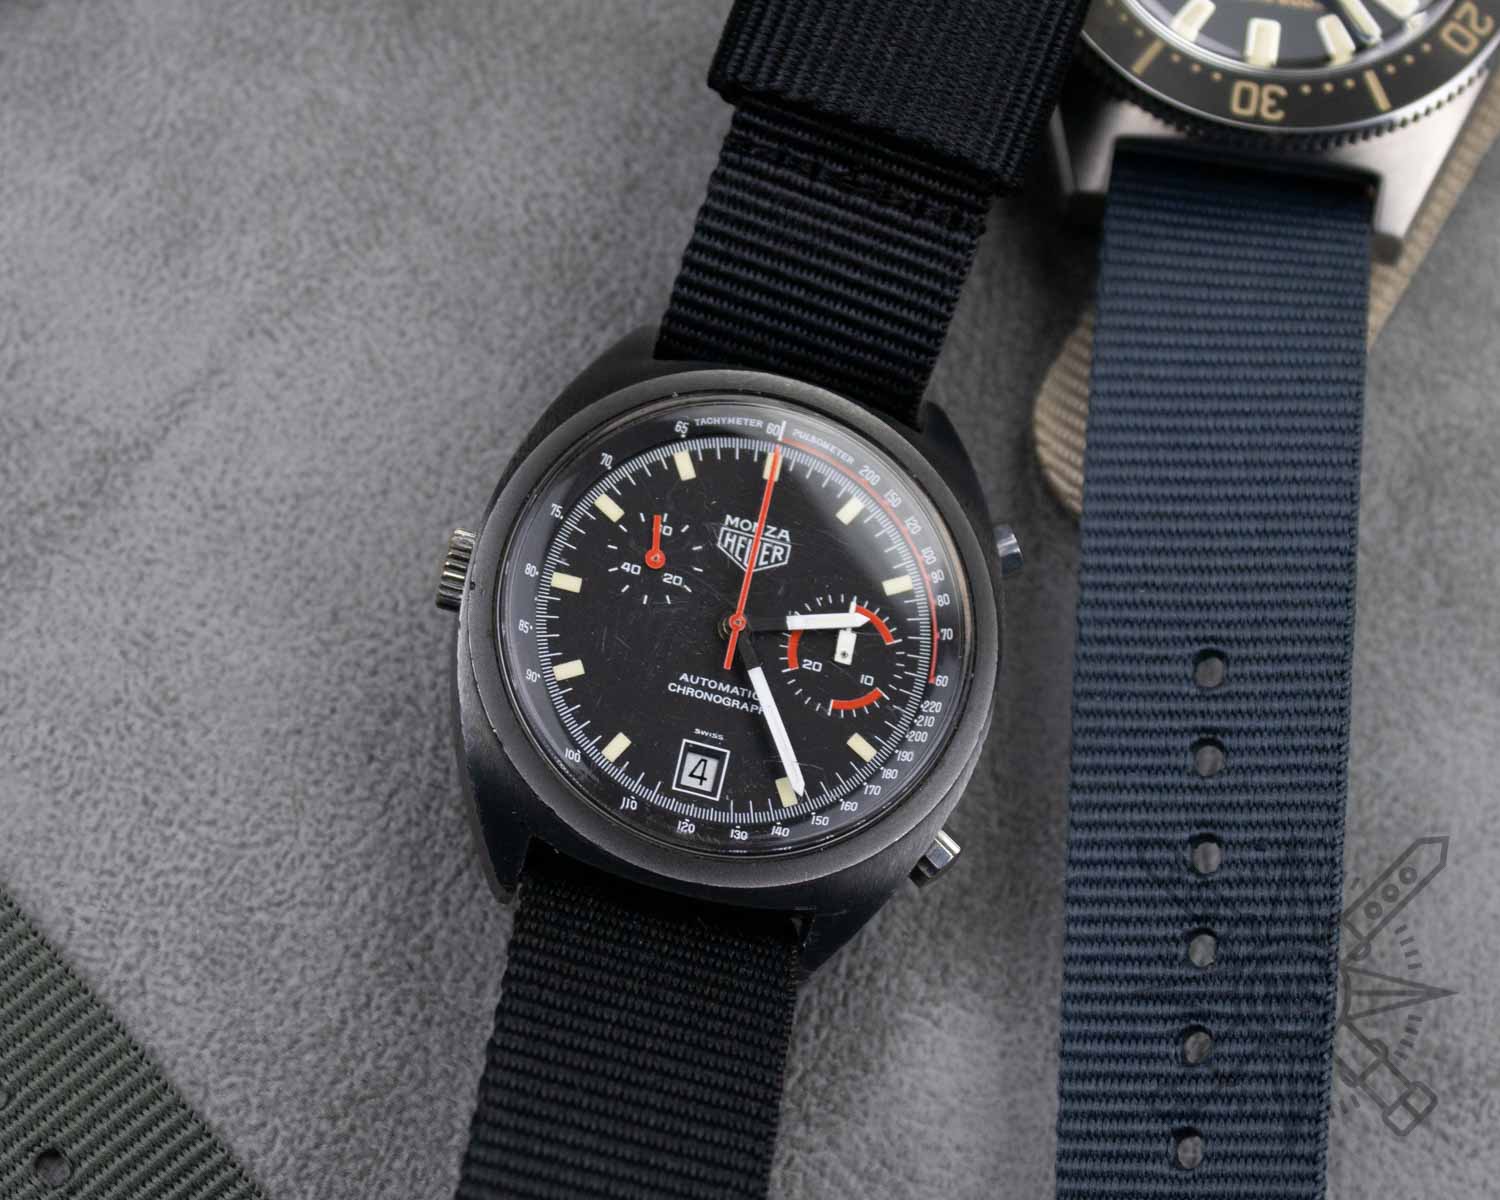 Vintage Heuer Monza on a black Nylon watch strap